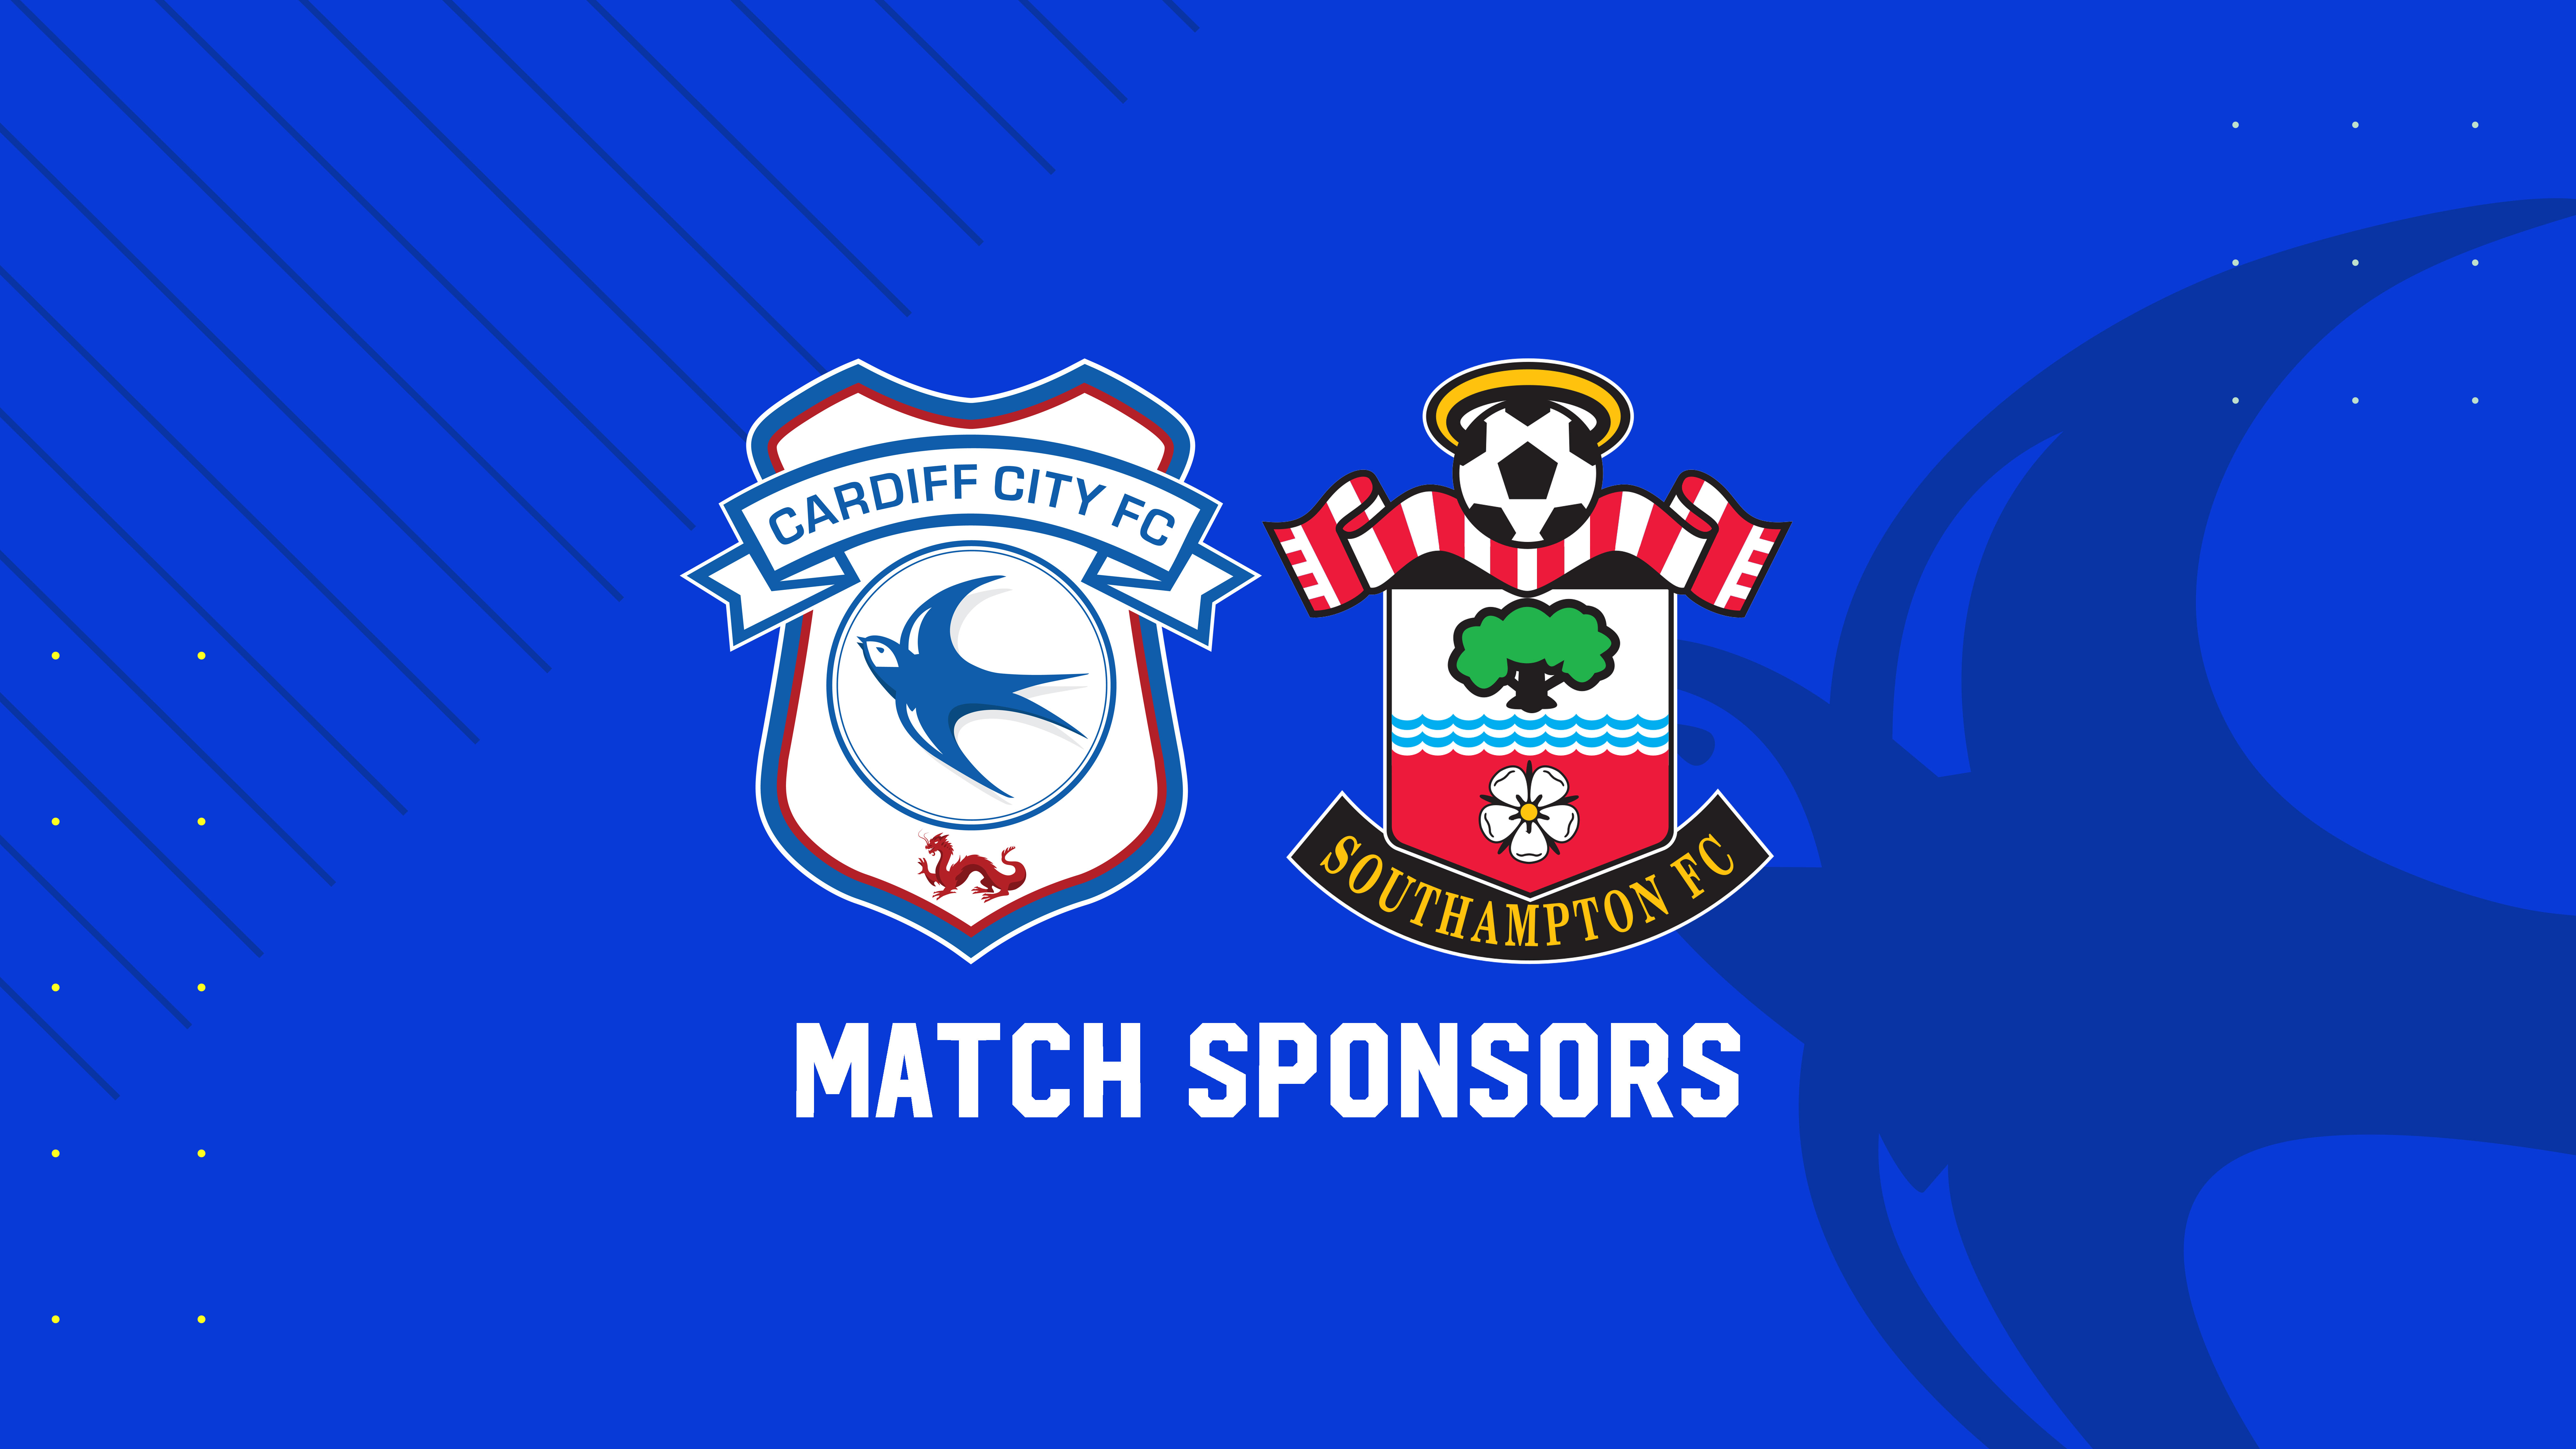 Match Sponsors: Cardiff City vs. Southampton